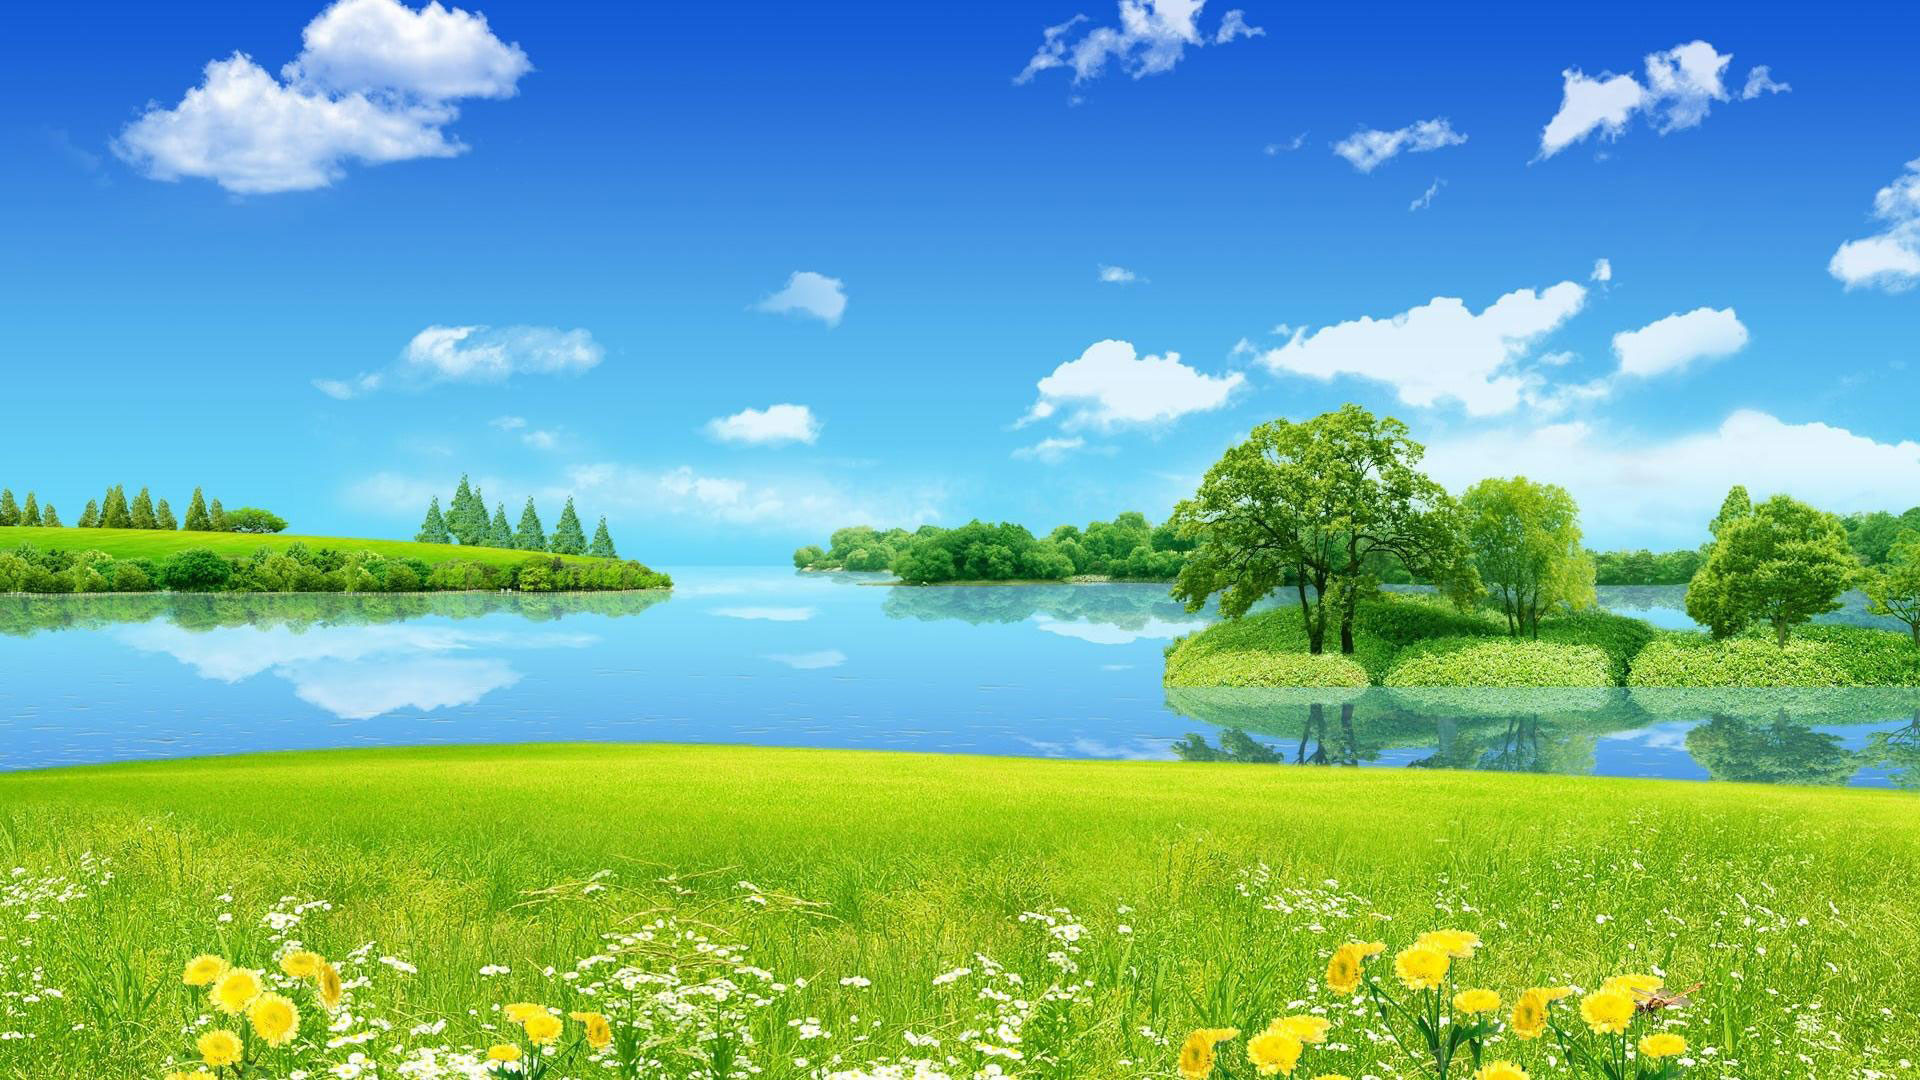 1920x1080 hd pics photos nature animated scenery lake hd desktop background wallpaper